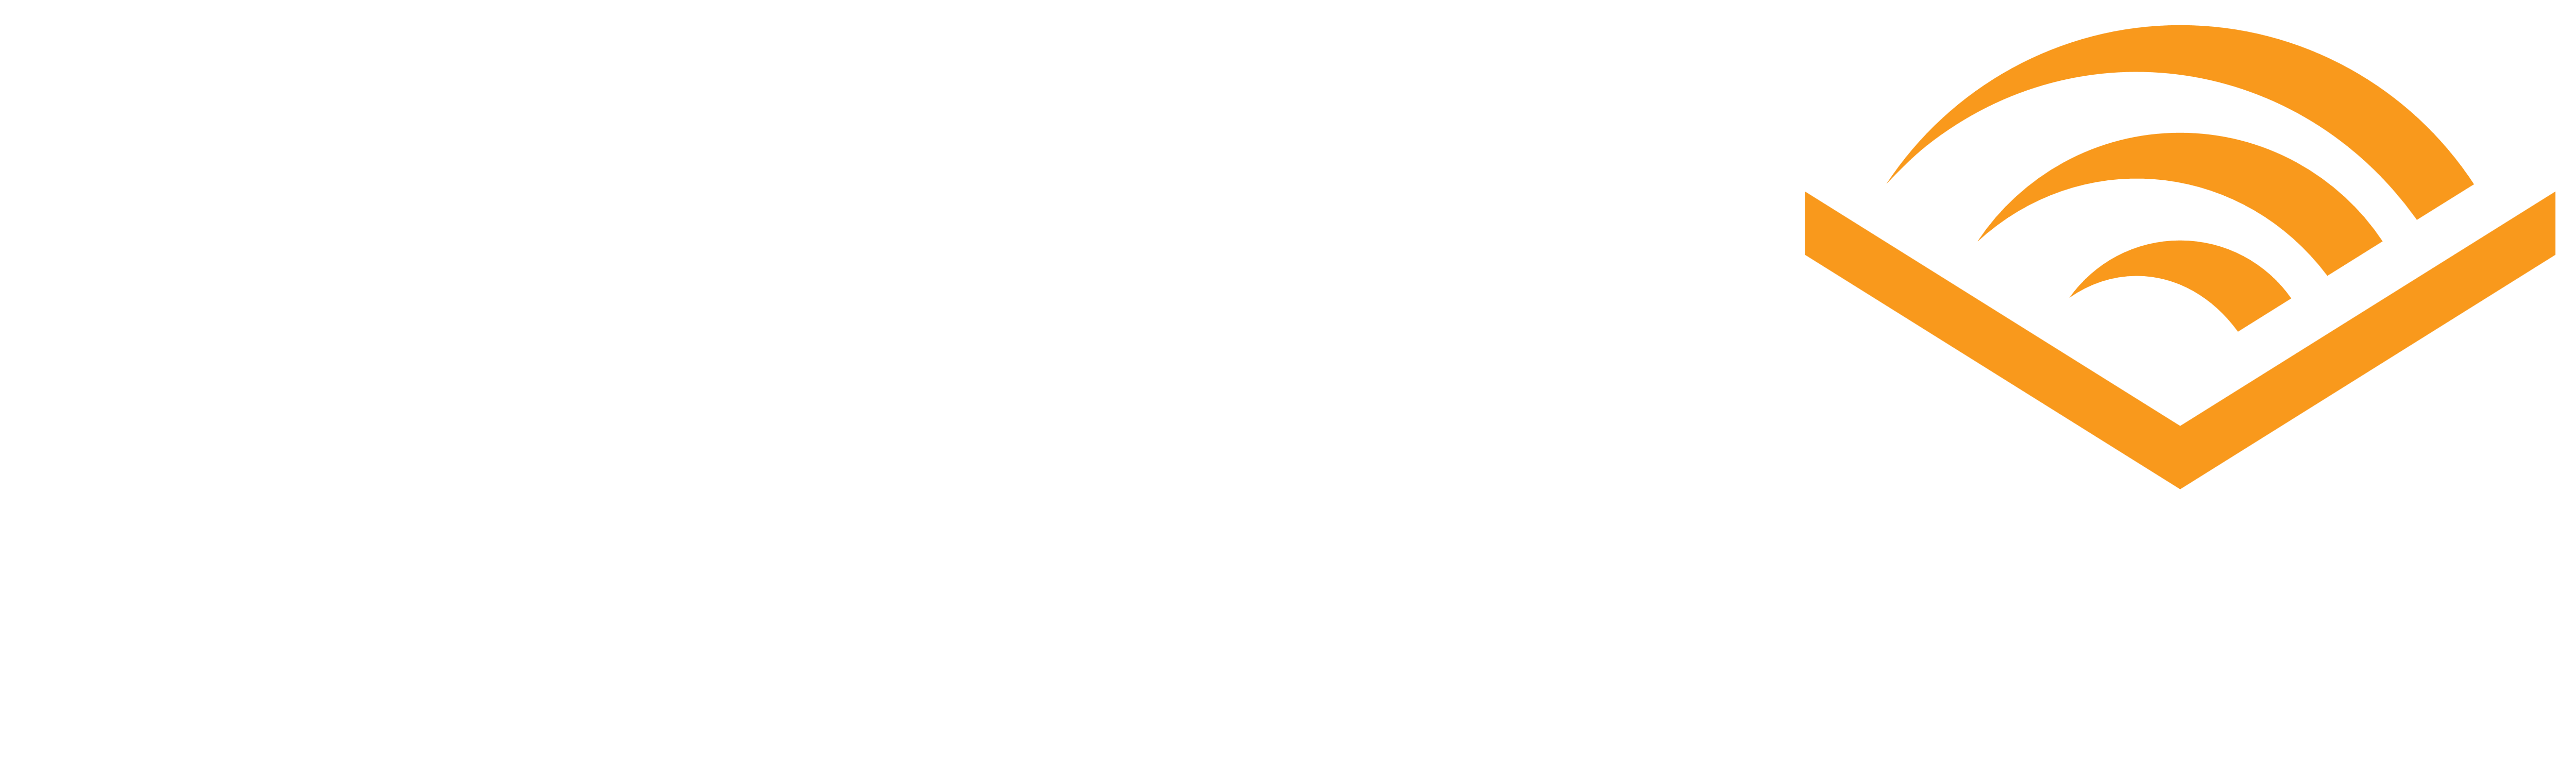 Audible_logo_white